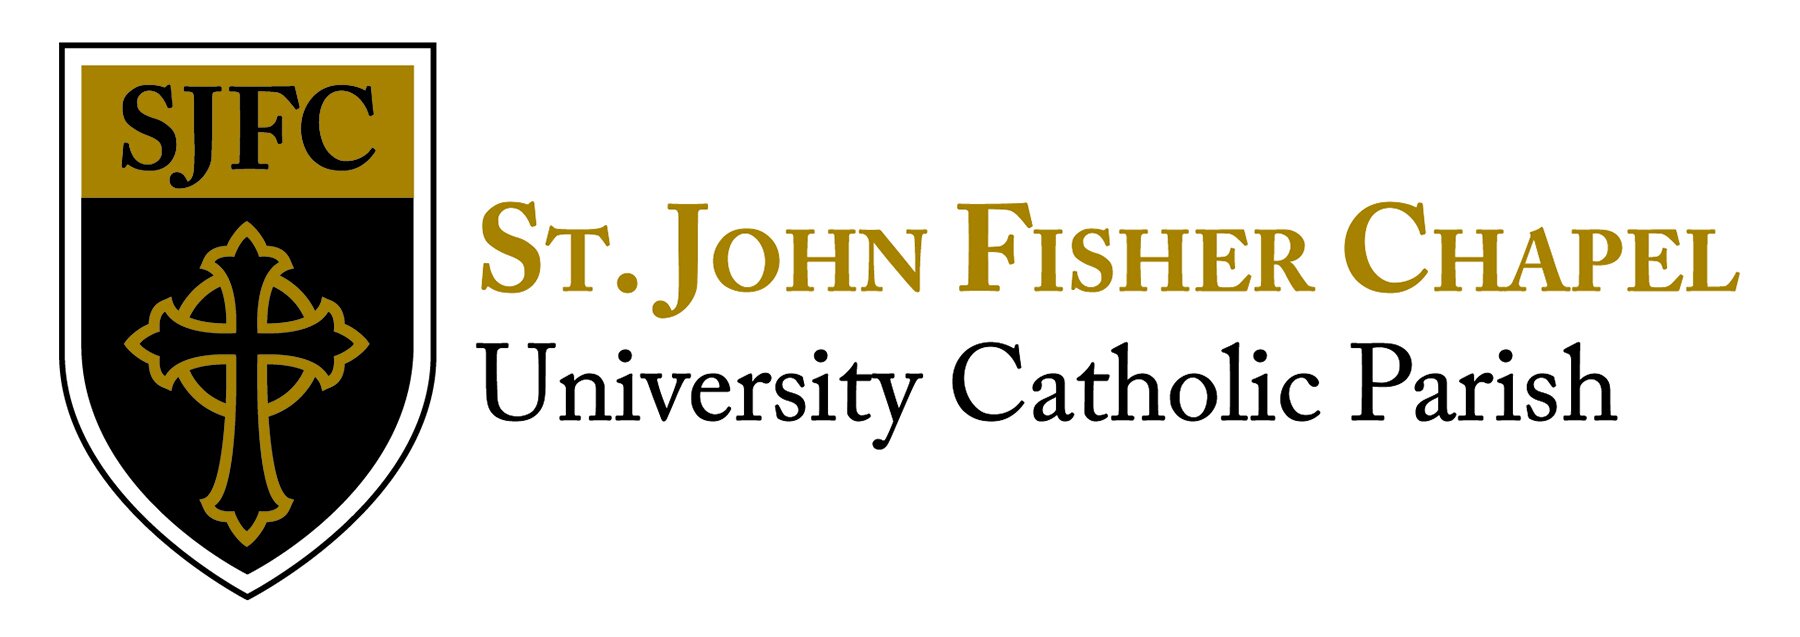 Sjfc 2022 Calendar St John Fisher Chapel University Catholic Parish